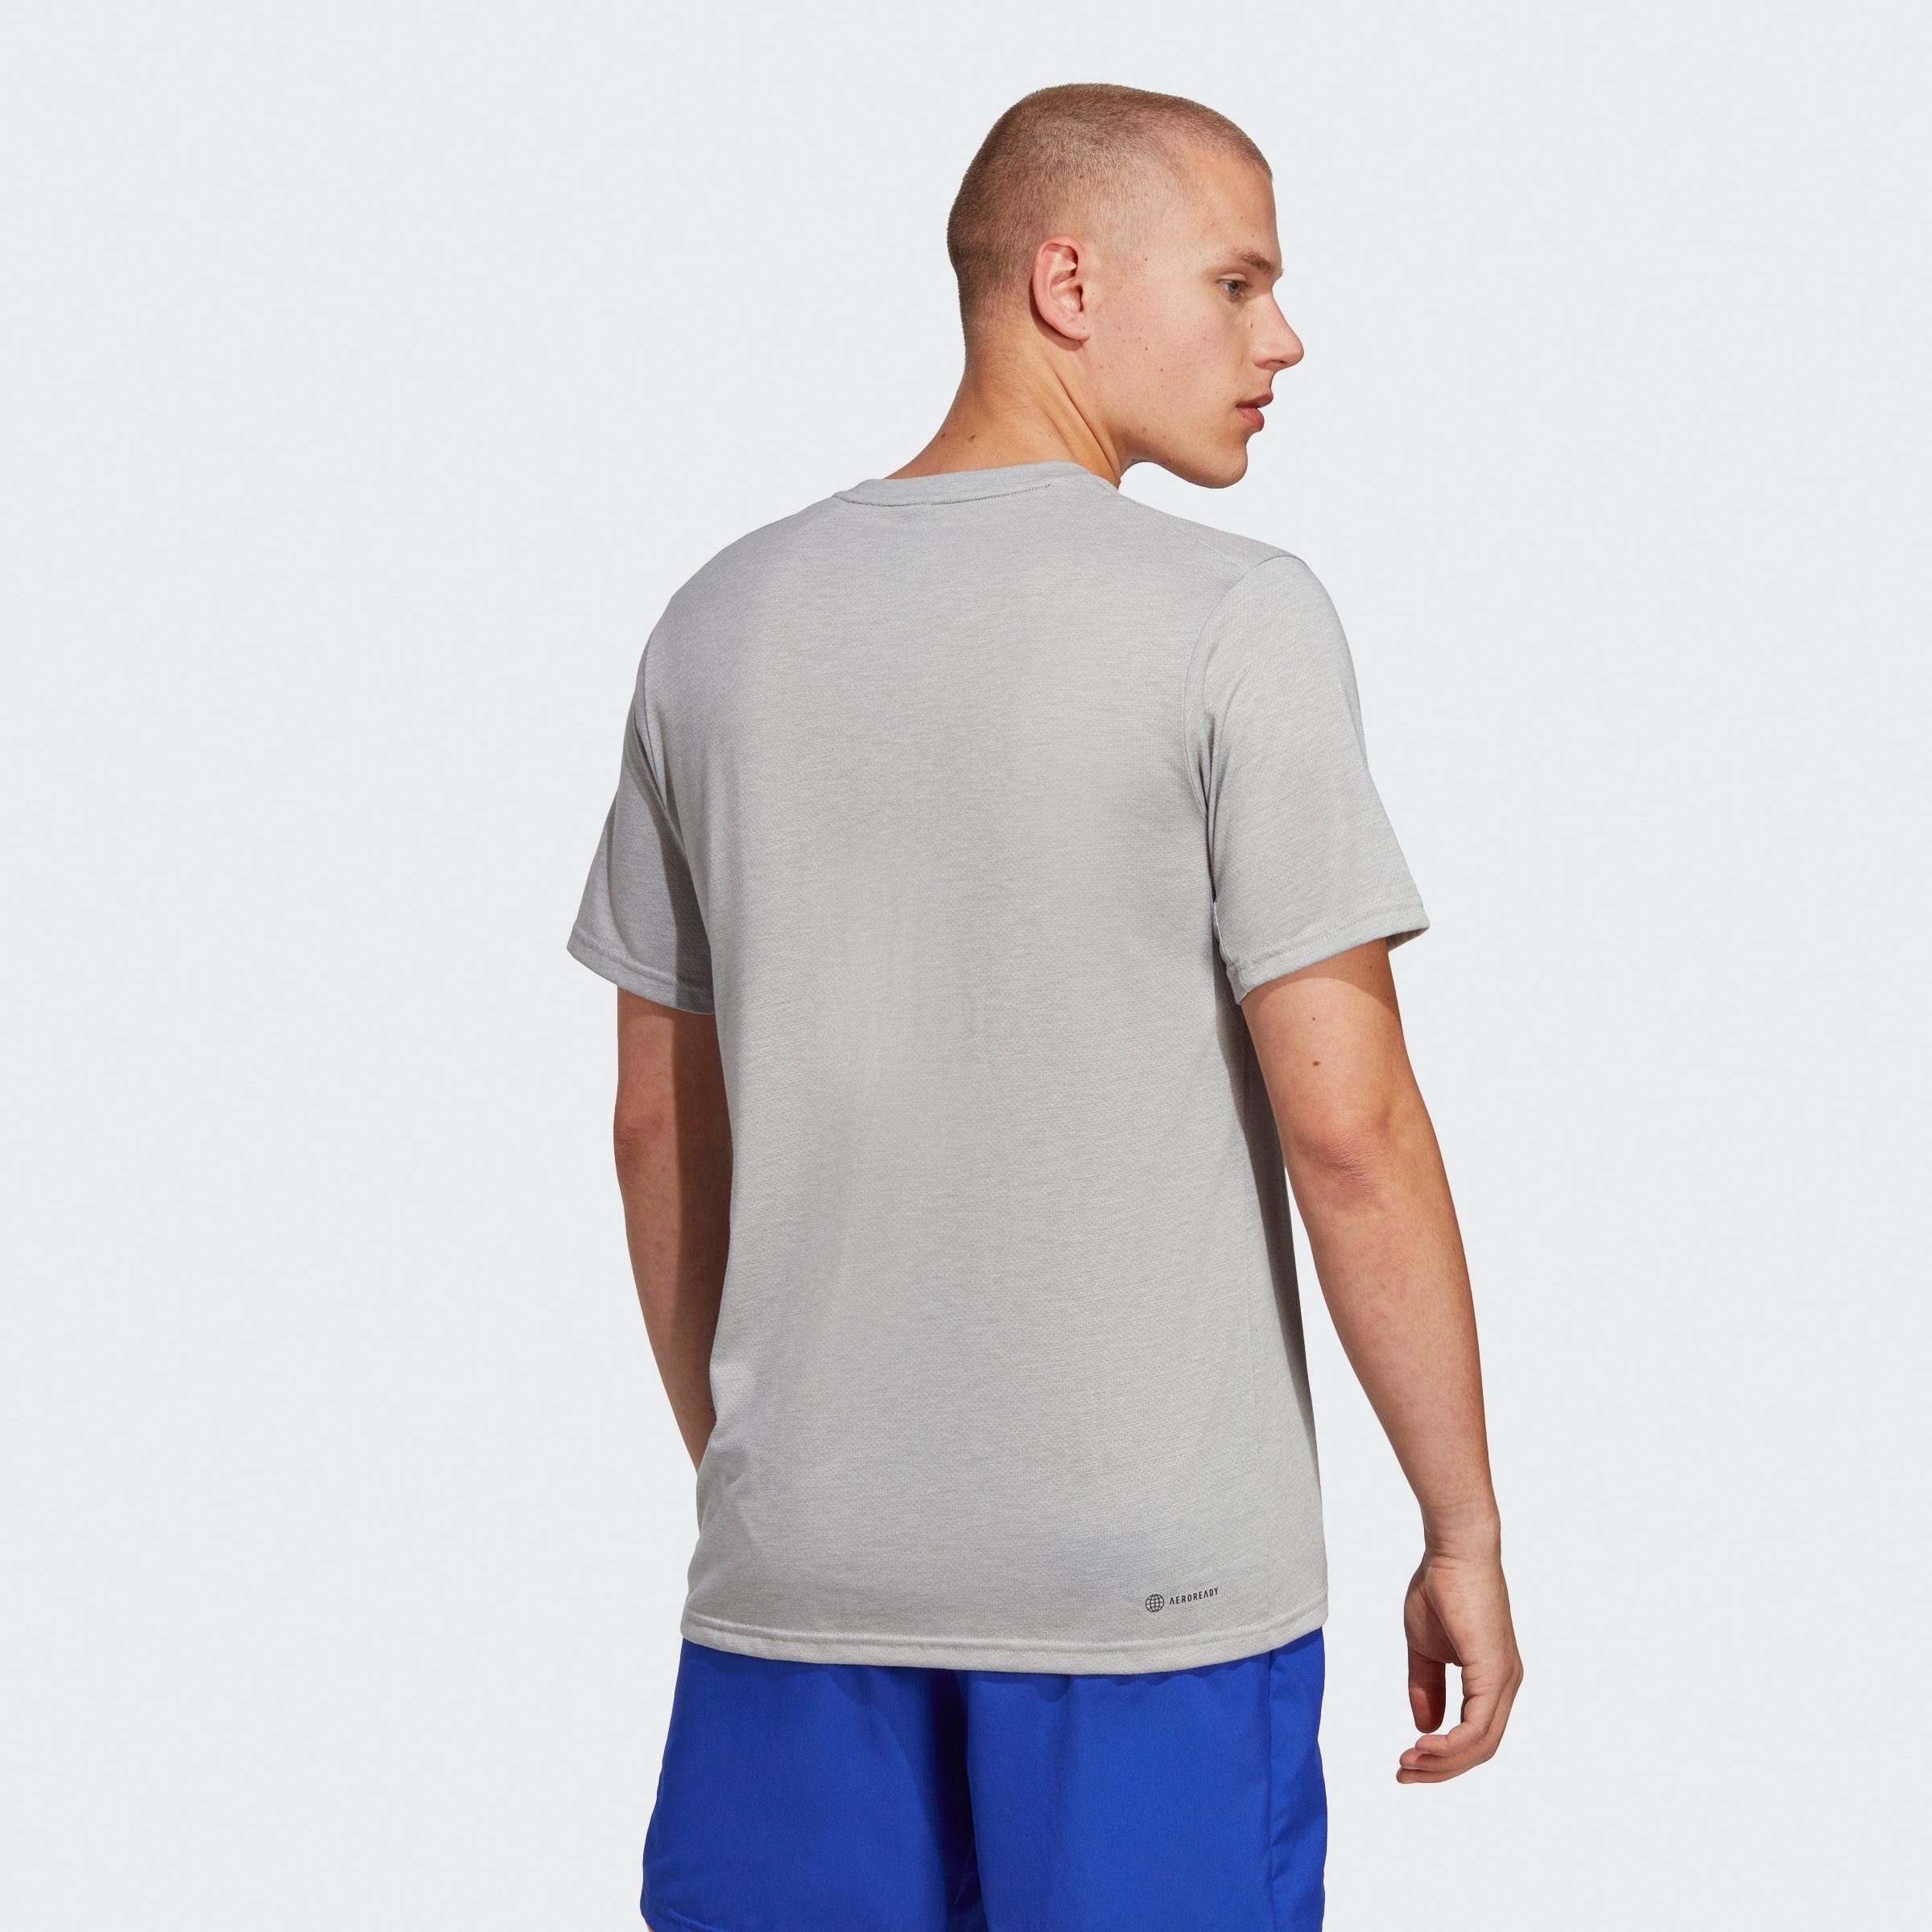 ESSENTIALS White / TRAIN TRAINING / Heather Grey Medium Black COMFORT adidas Performance T-Shirt